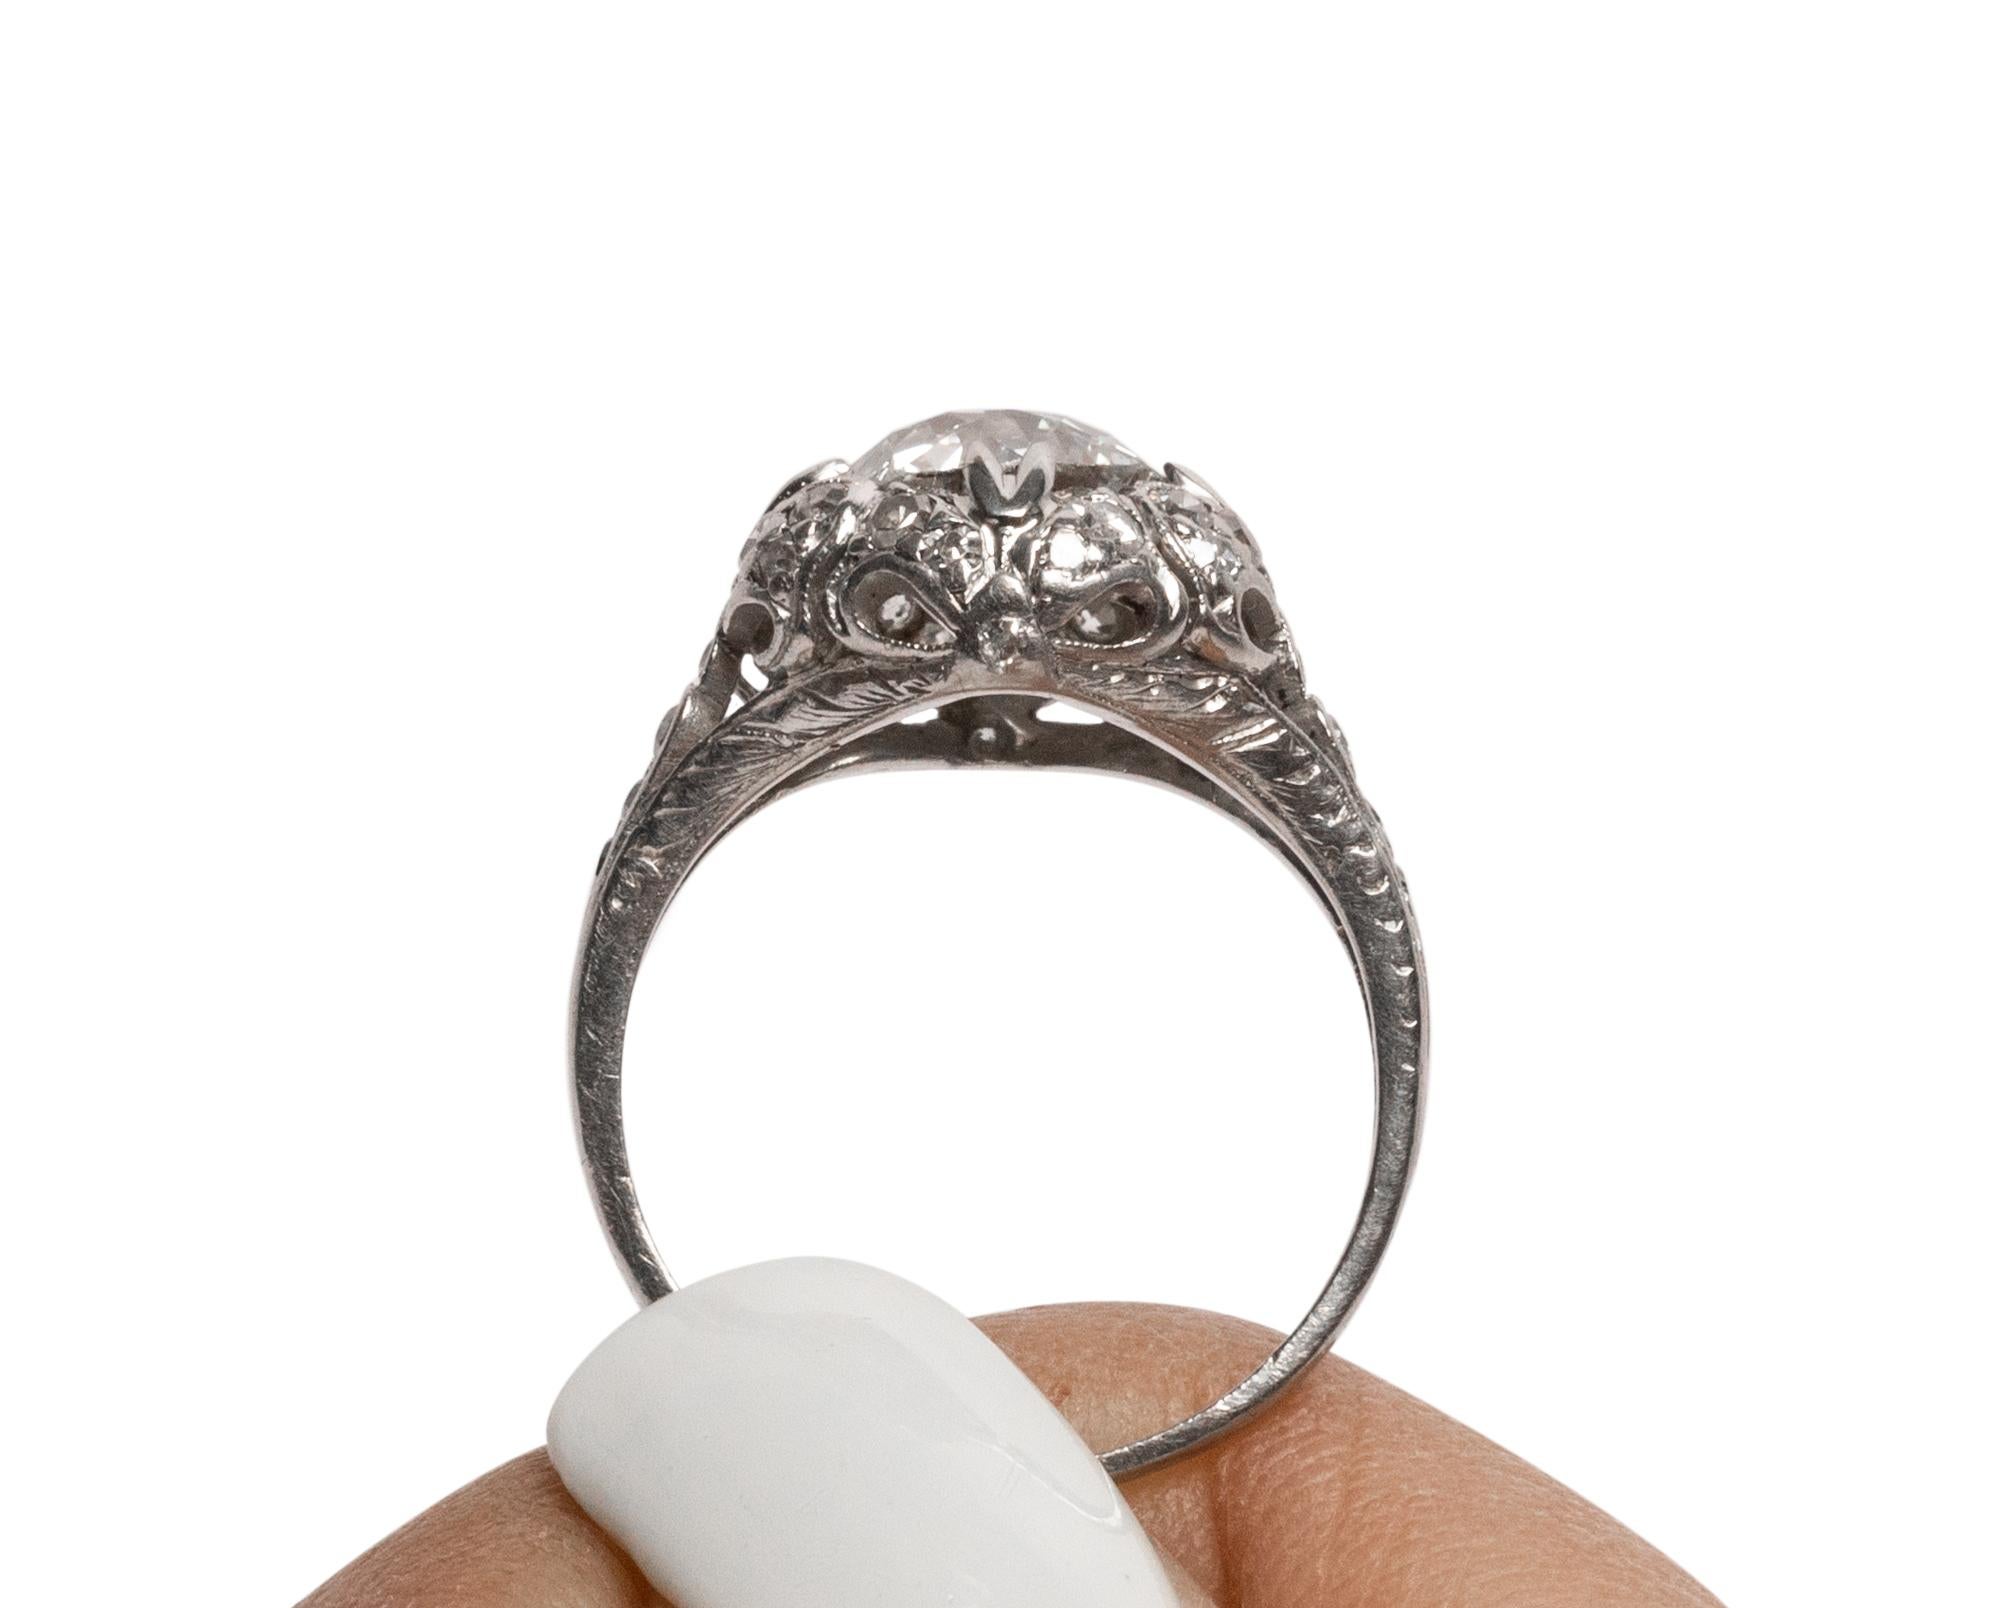 1000 carat diamond ring